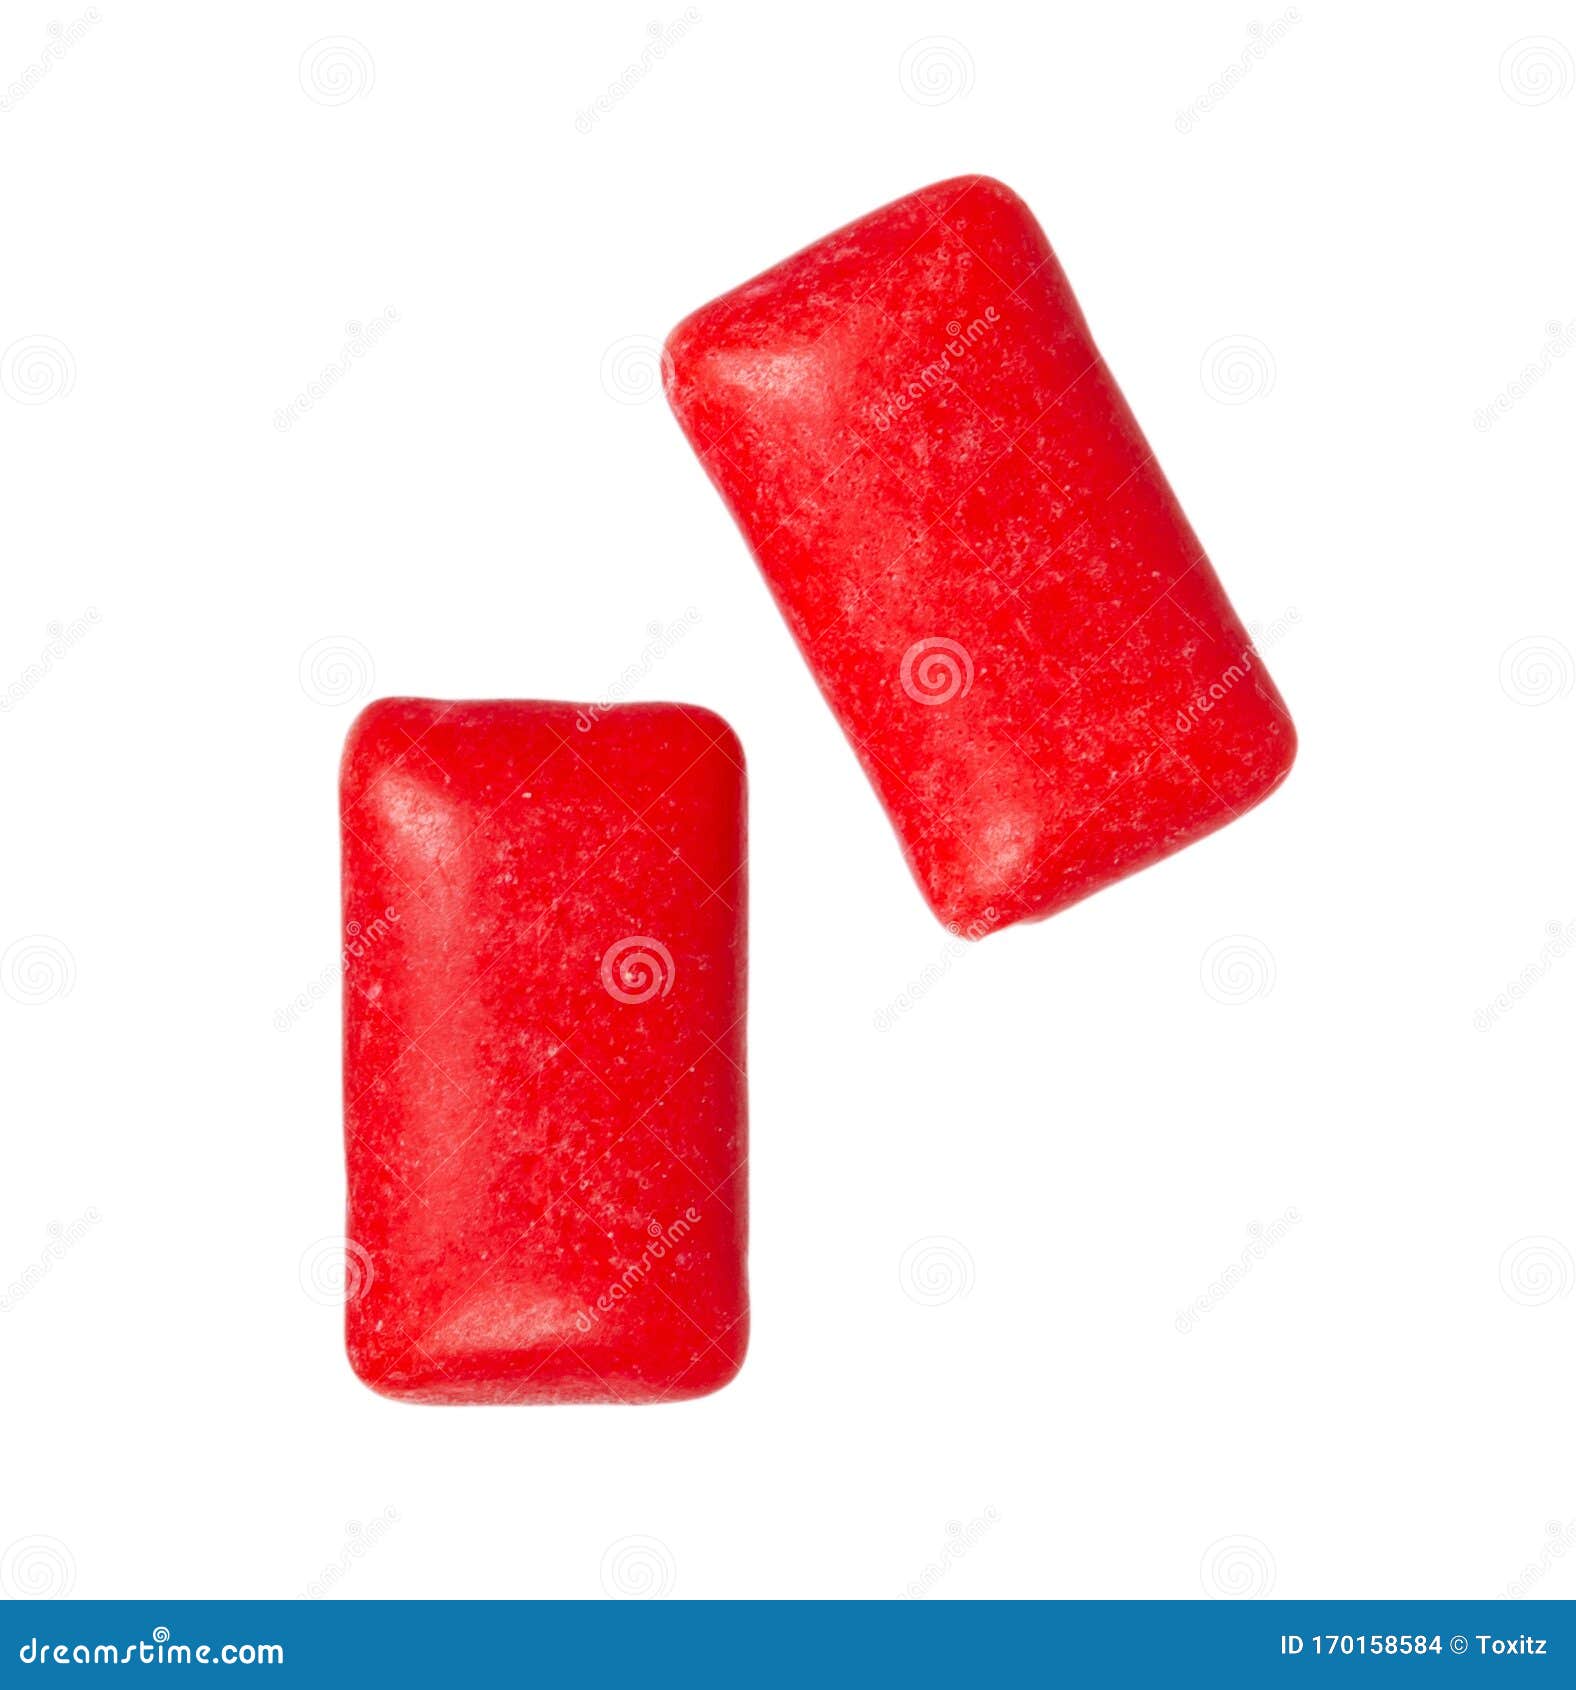 Red Gum. on White Background Stock Photo - Image of unpacked, fruit: 170158584